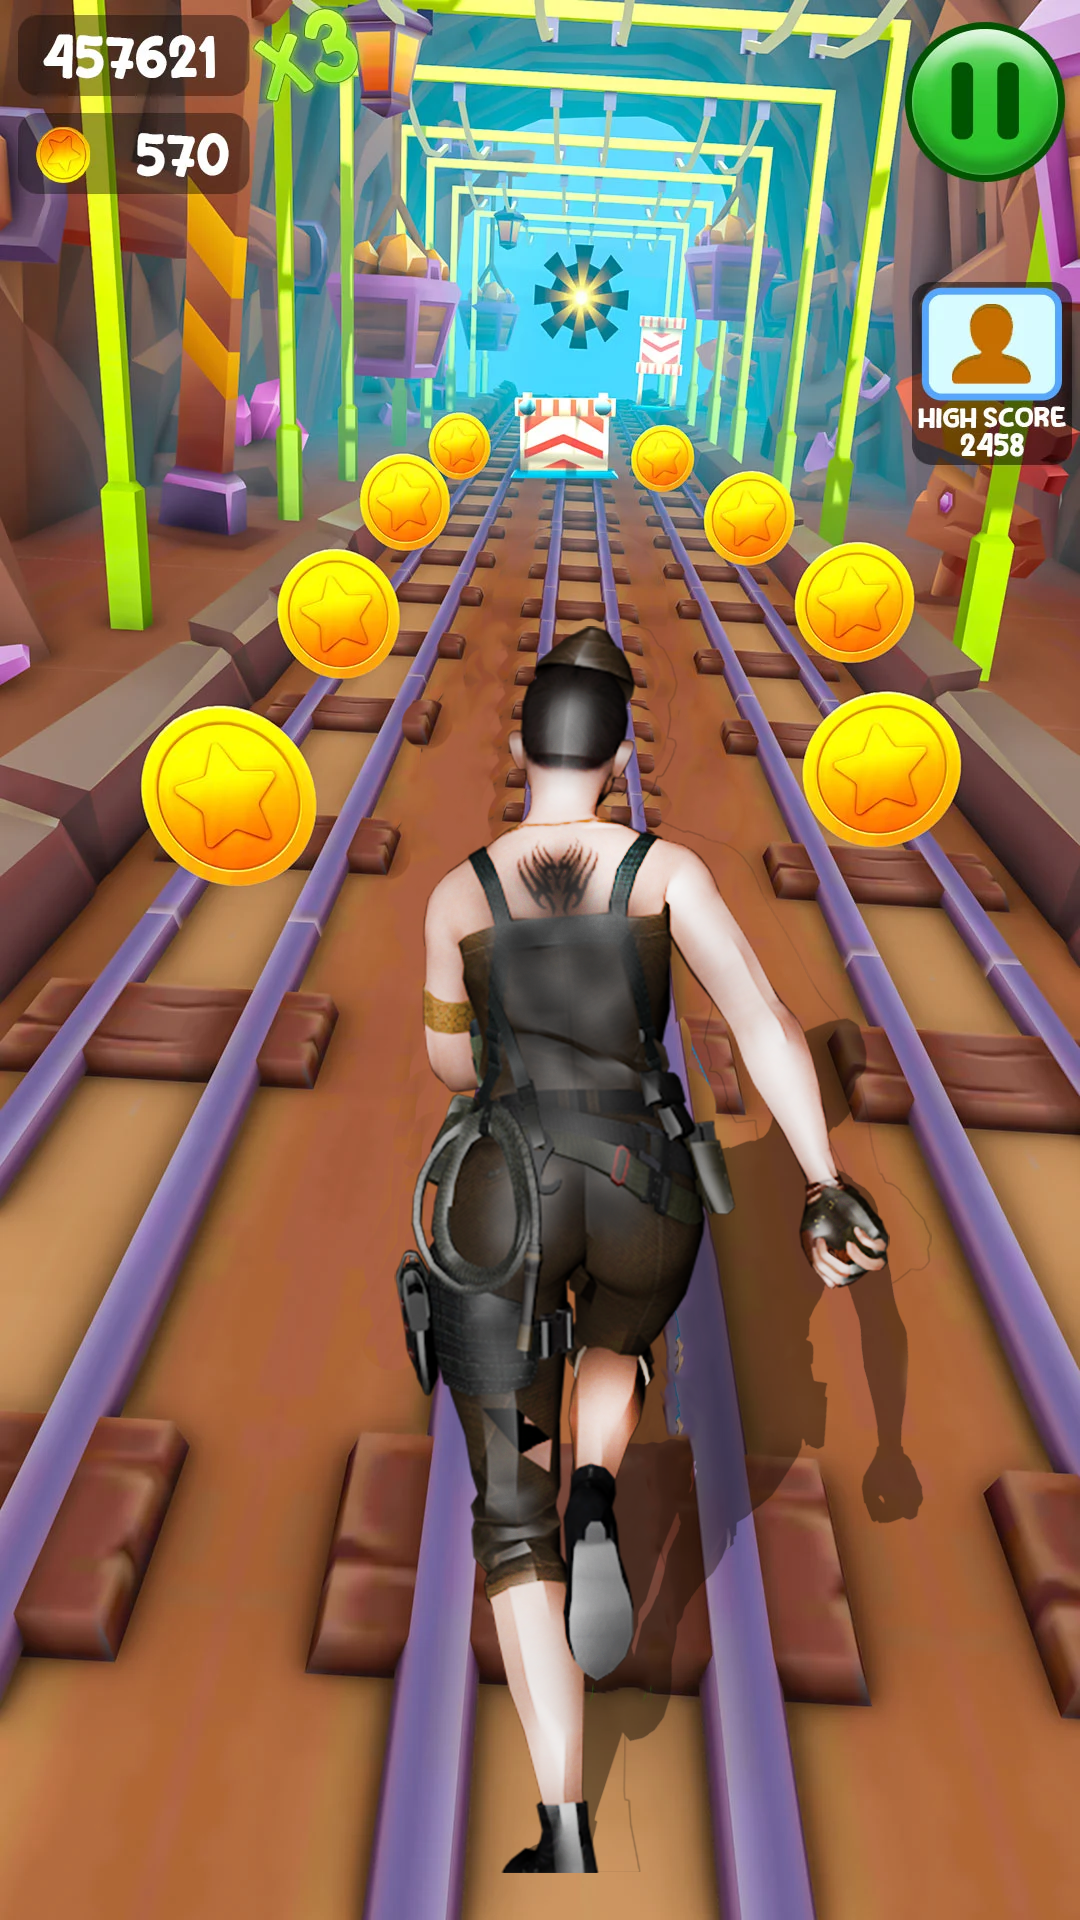 gorilla tag subway run train android iOS apk download for free-TapTap